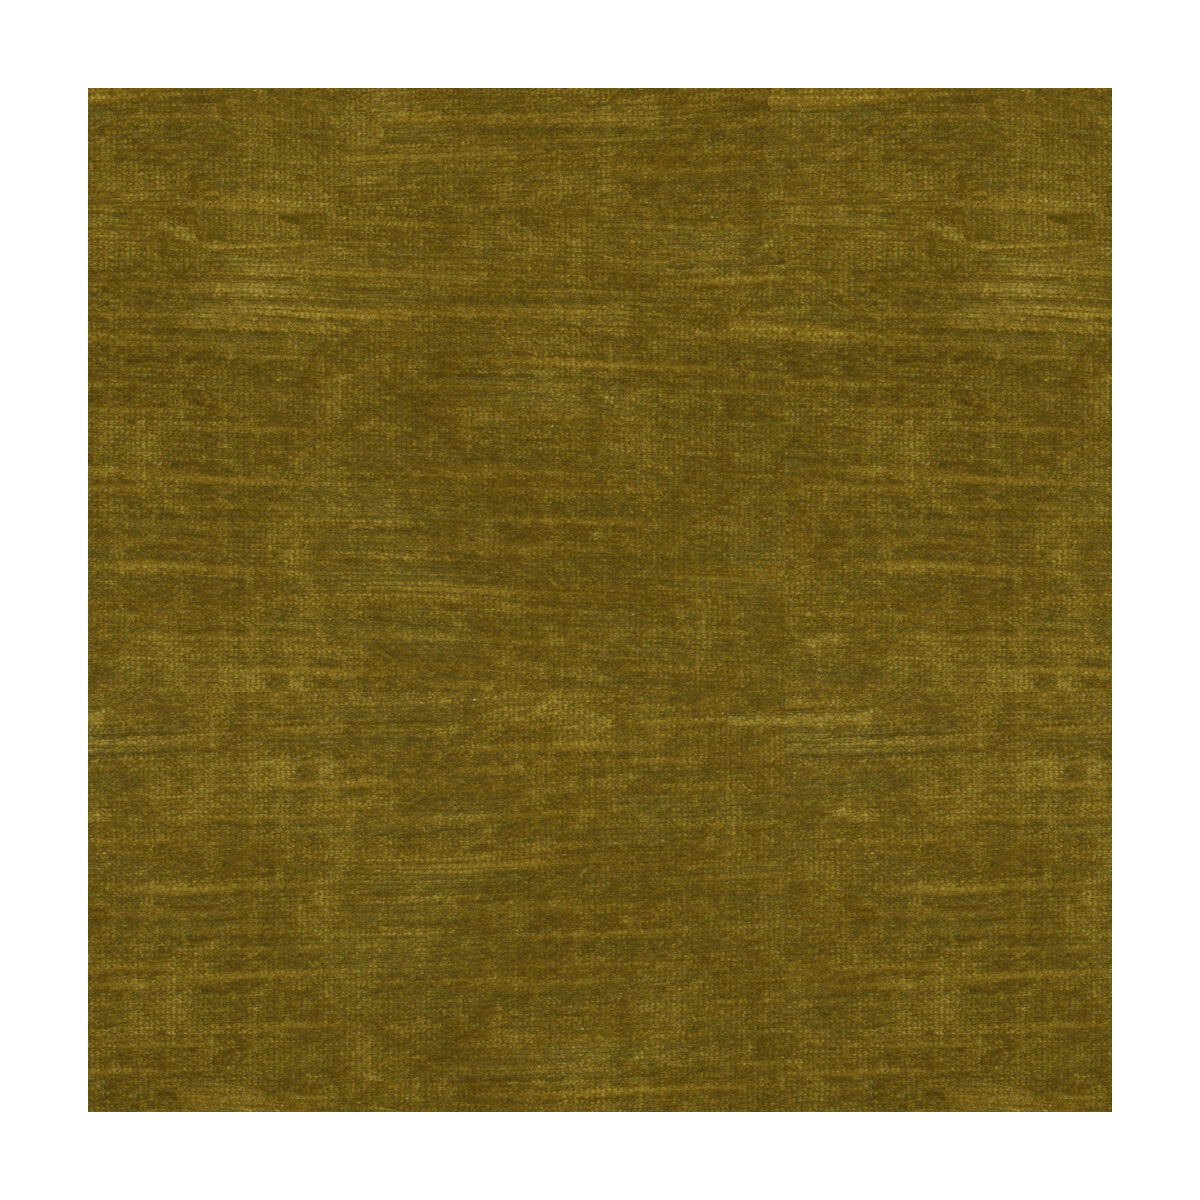 Lazare Velvet fabric in antique gold color - pattern 8016103.130.0 - by Brunschwig &amp; Fils